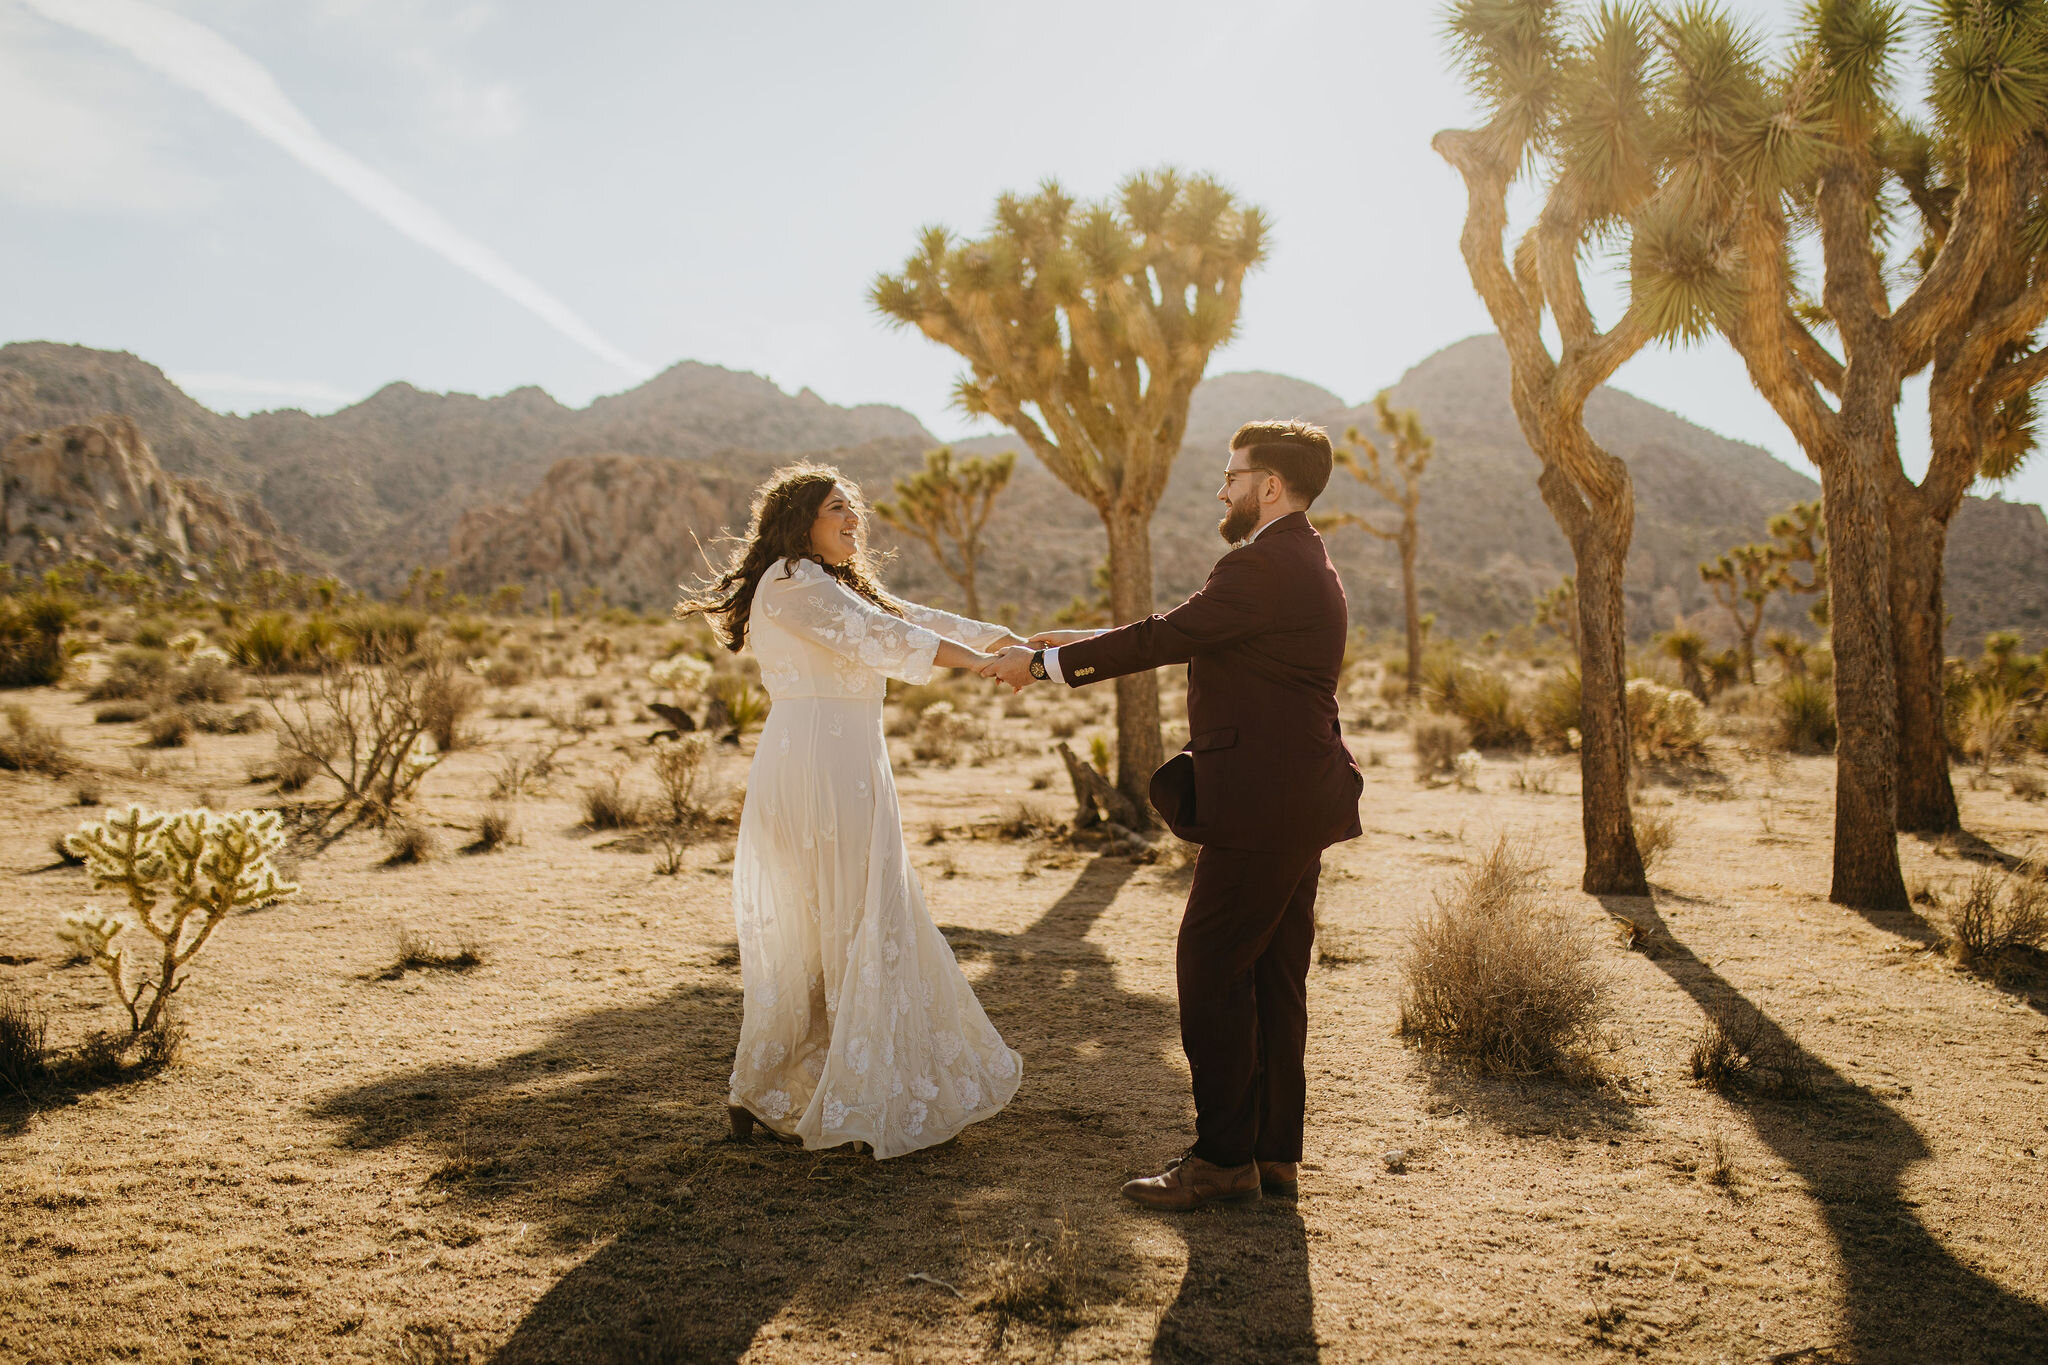 Joshua Tree Desert Wedding Inspiration